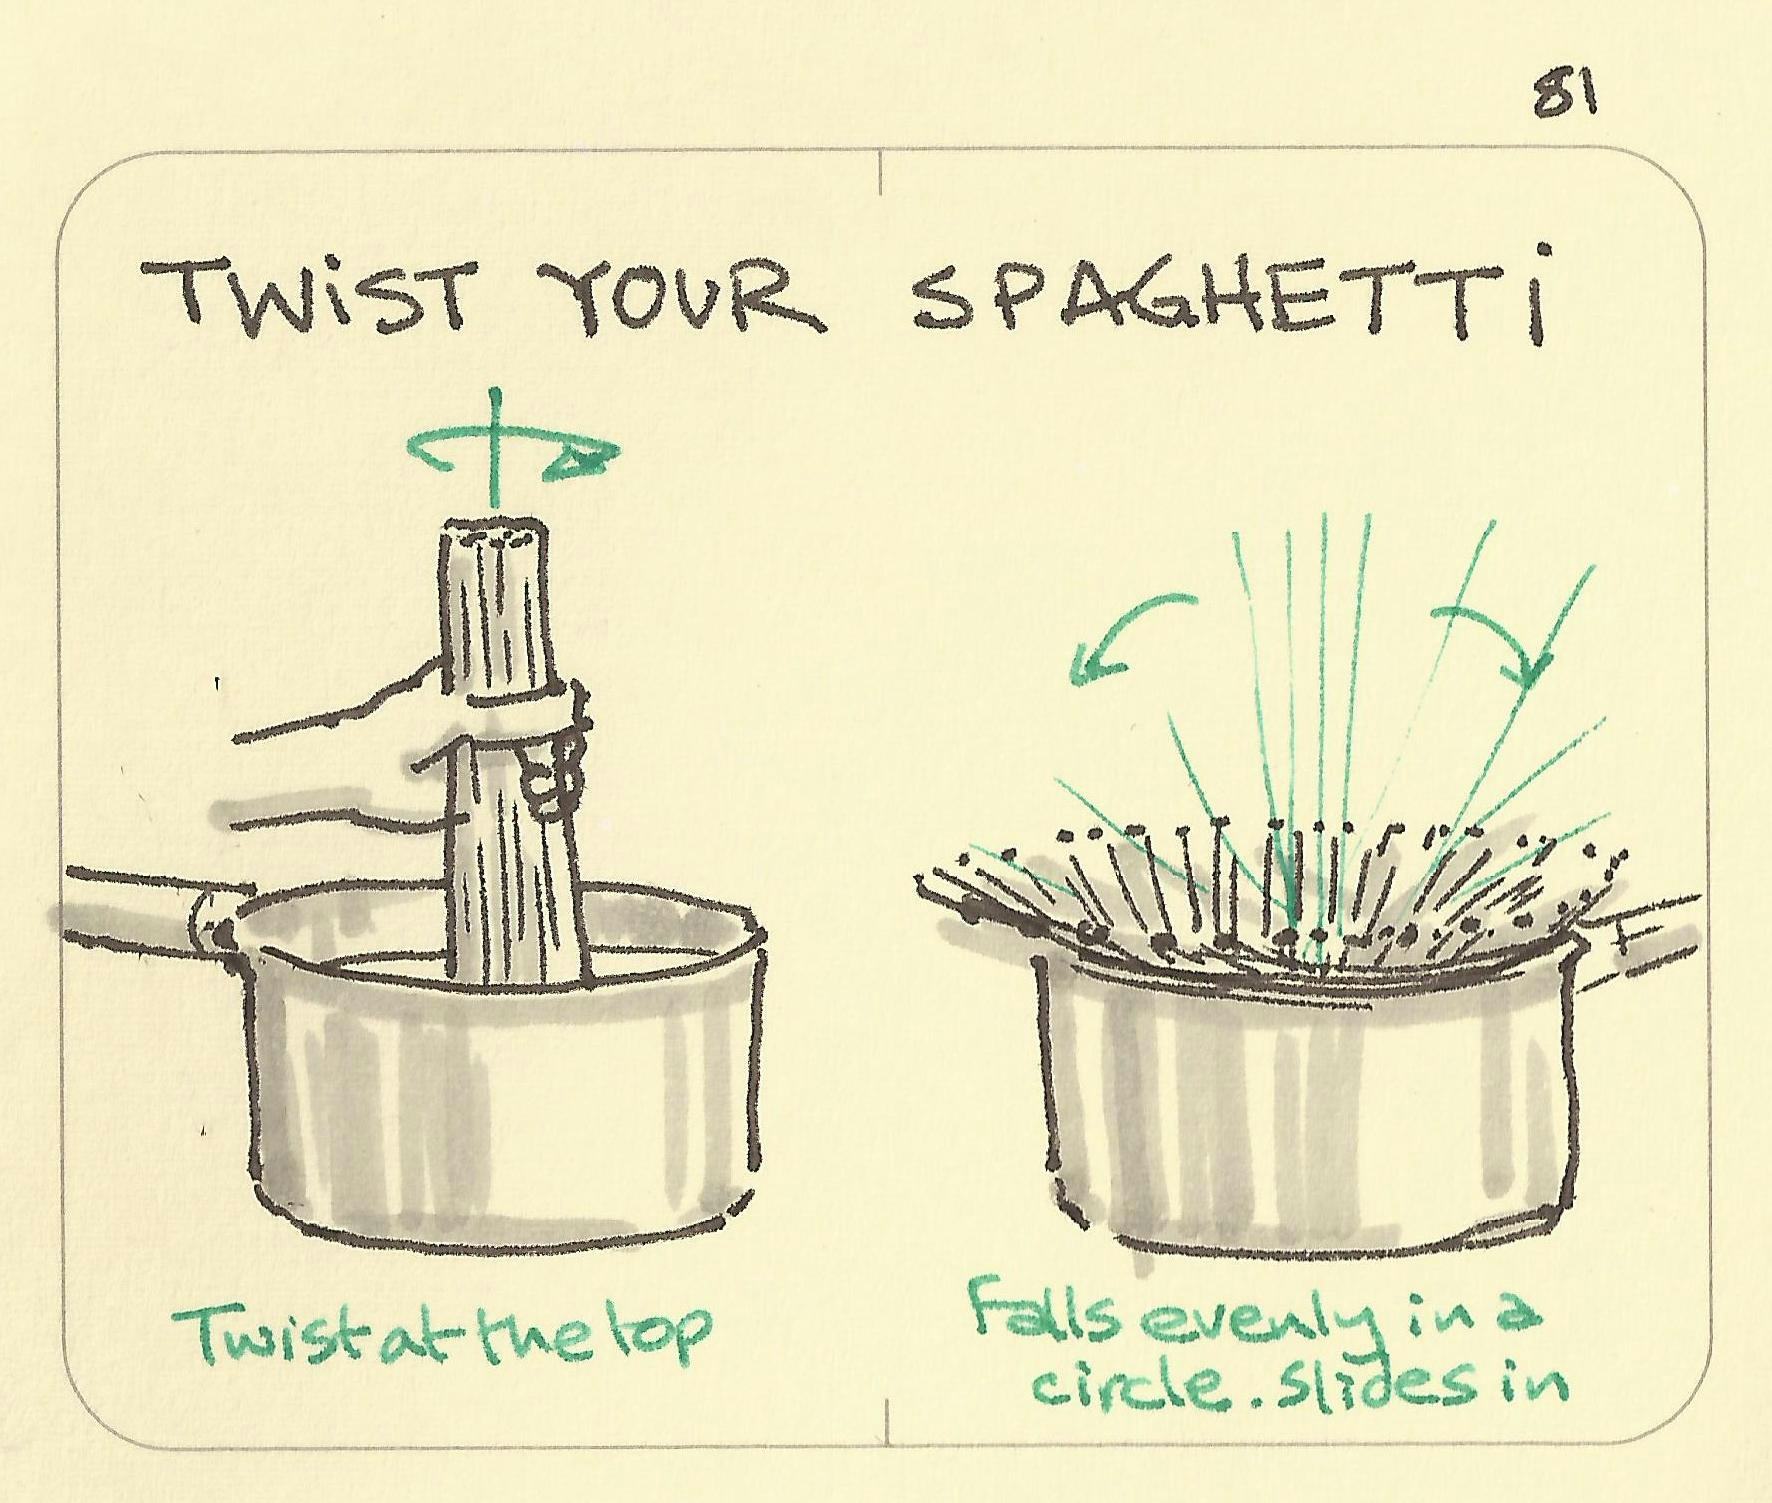 Twist your spaghetti - Sketchplanations